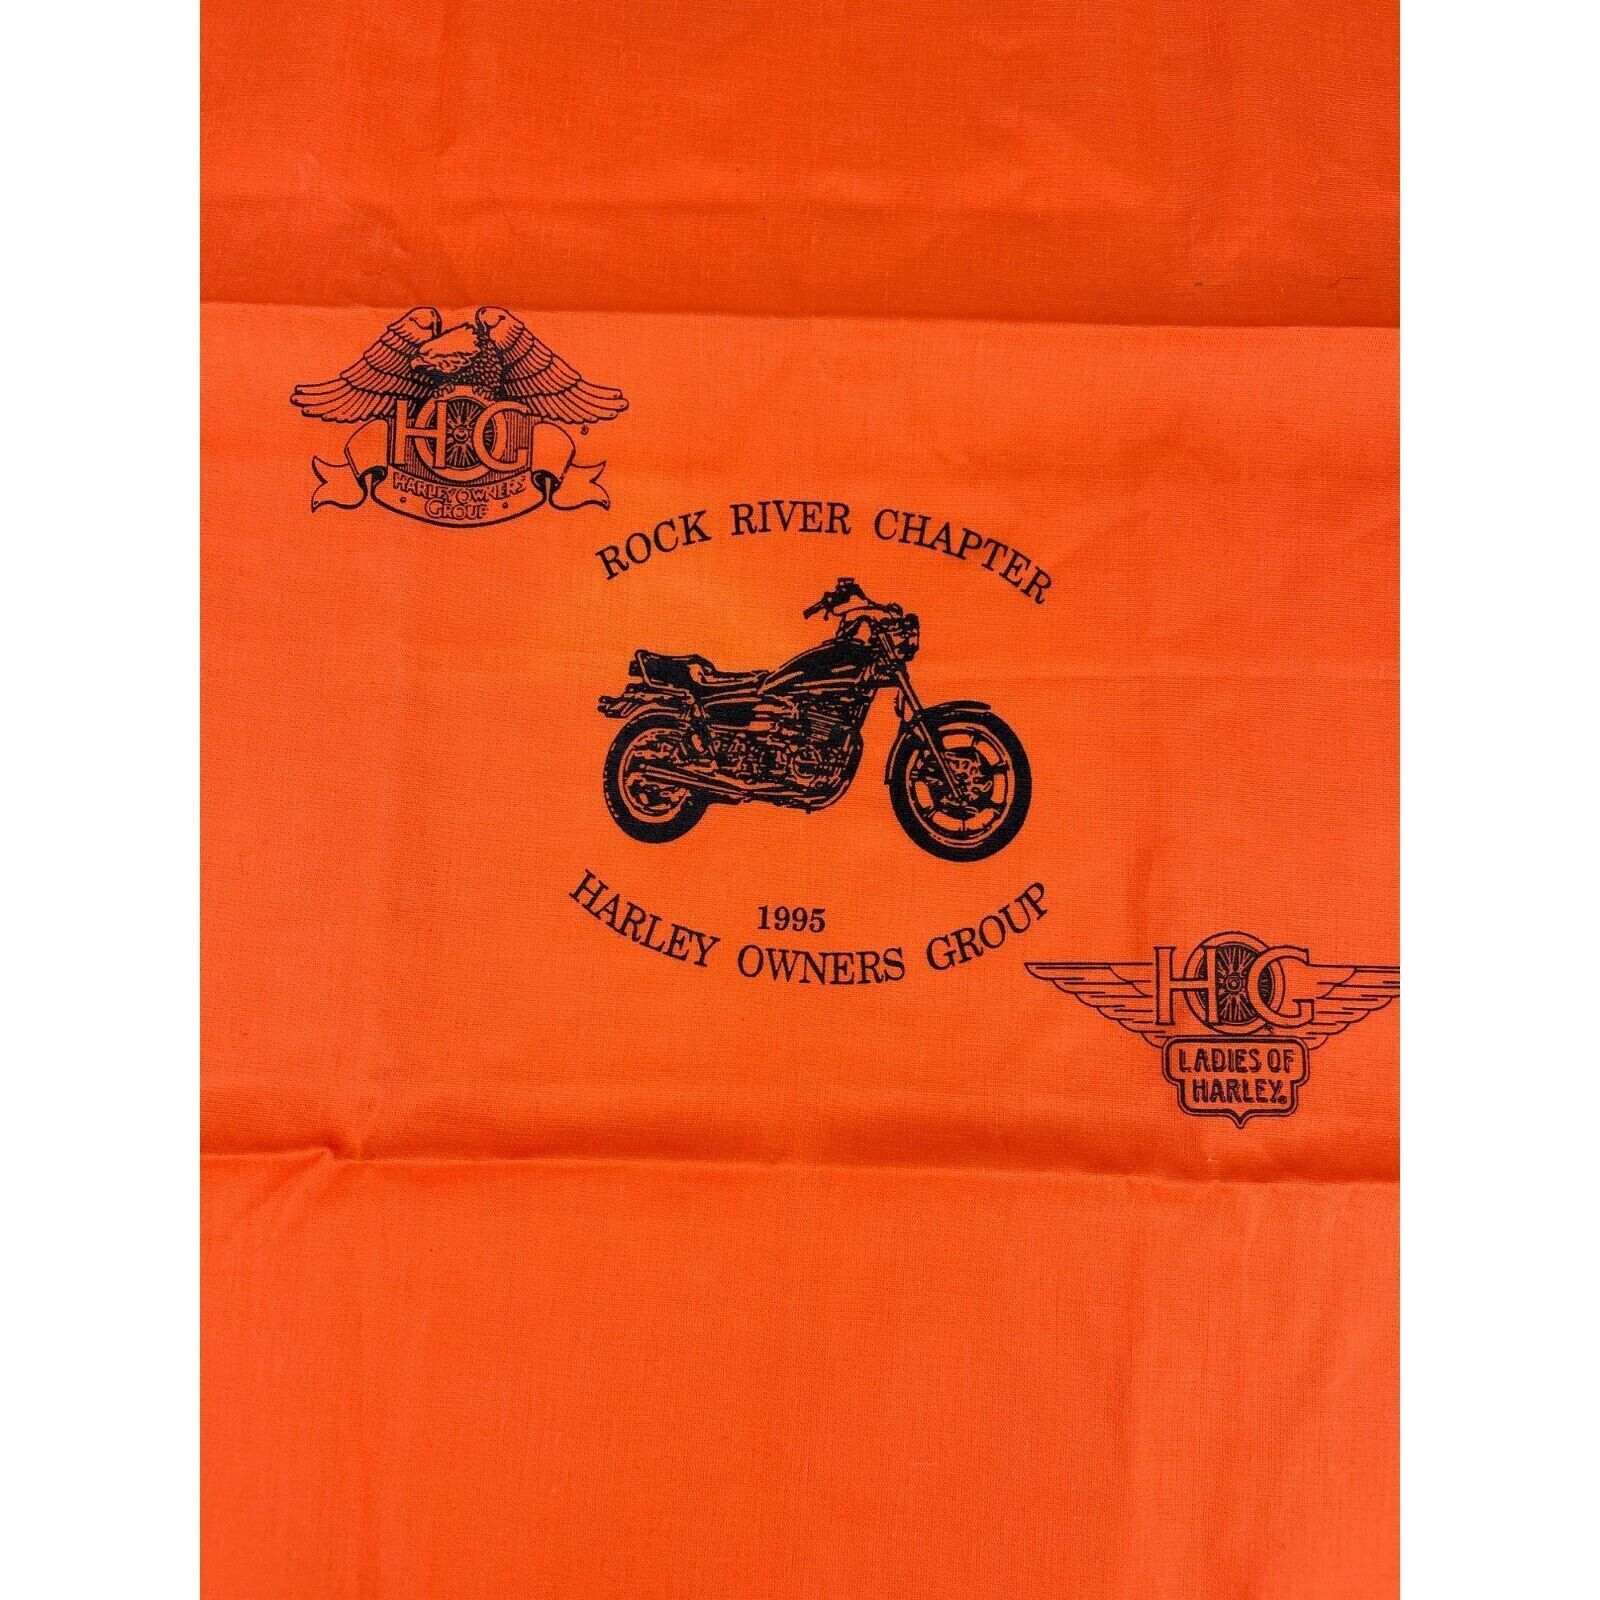 1995 Vintage Harley Davidson Bandana HOG Rock River Chapter Kerchief 